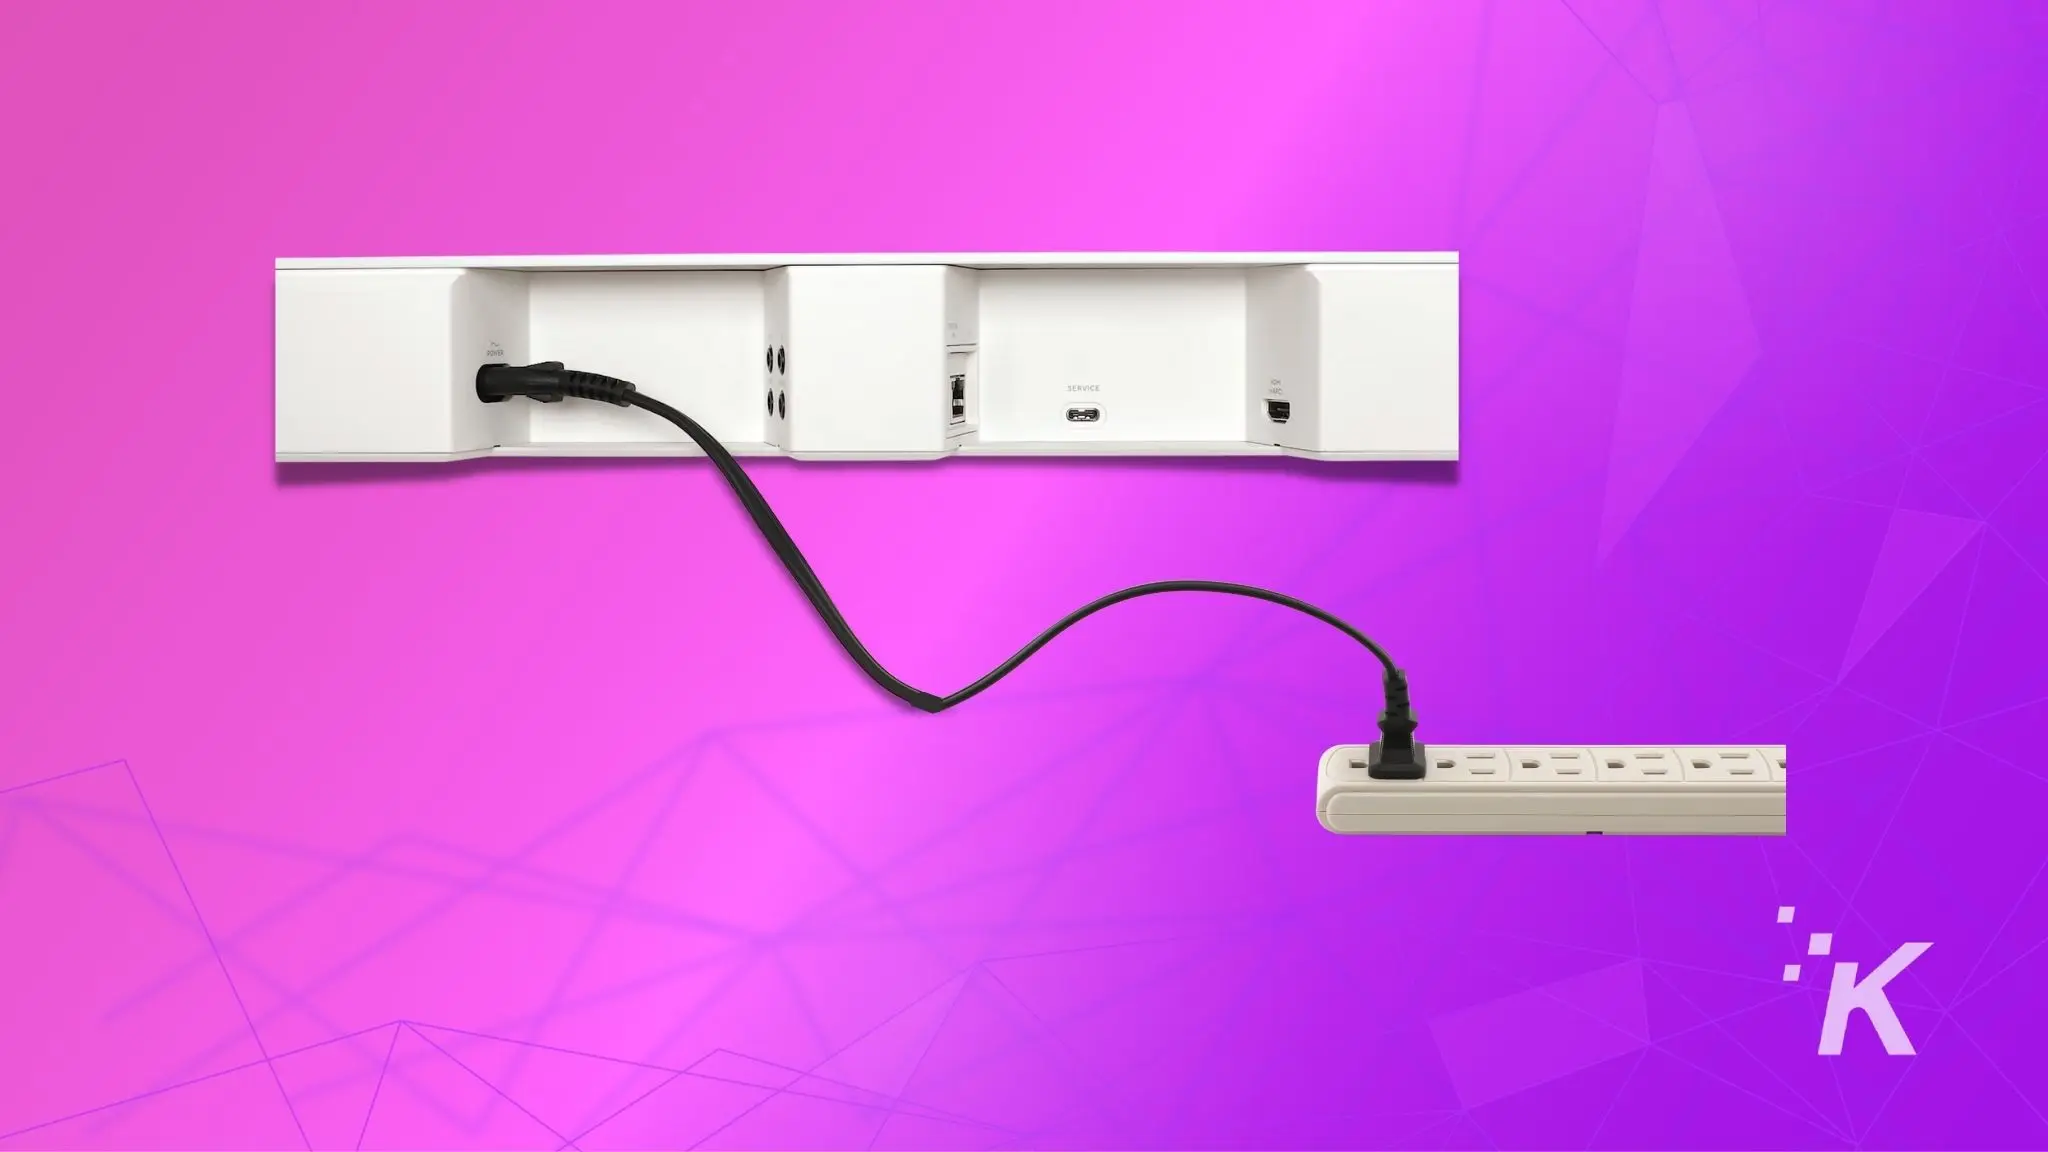 unplug soundbar from power outlet